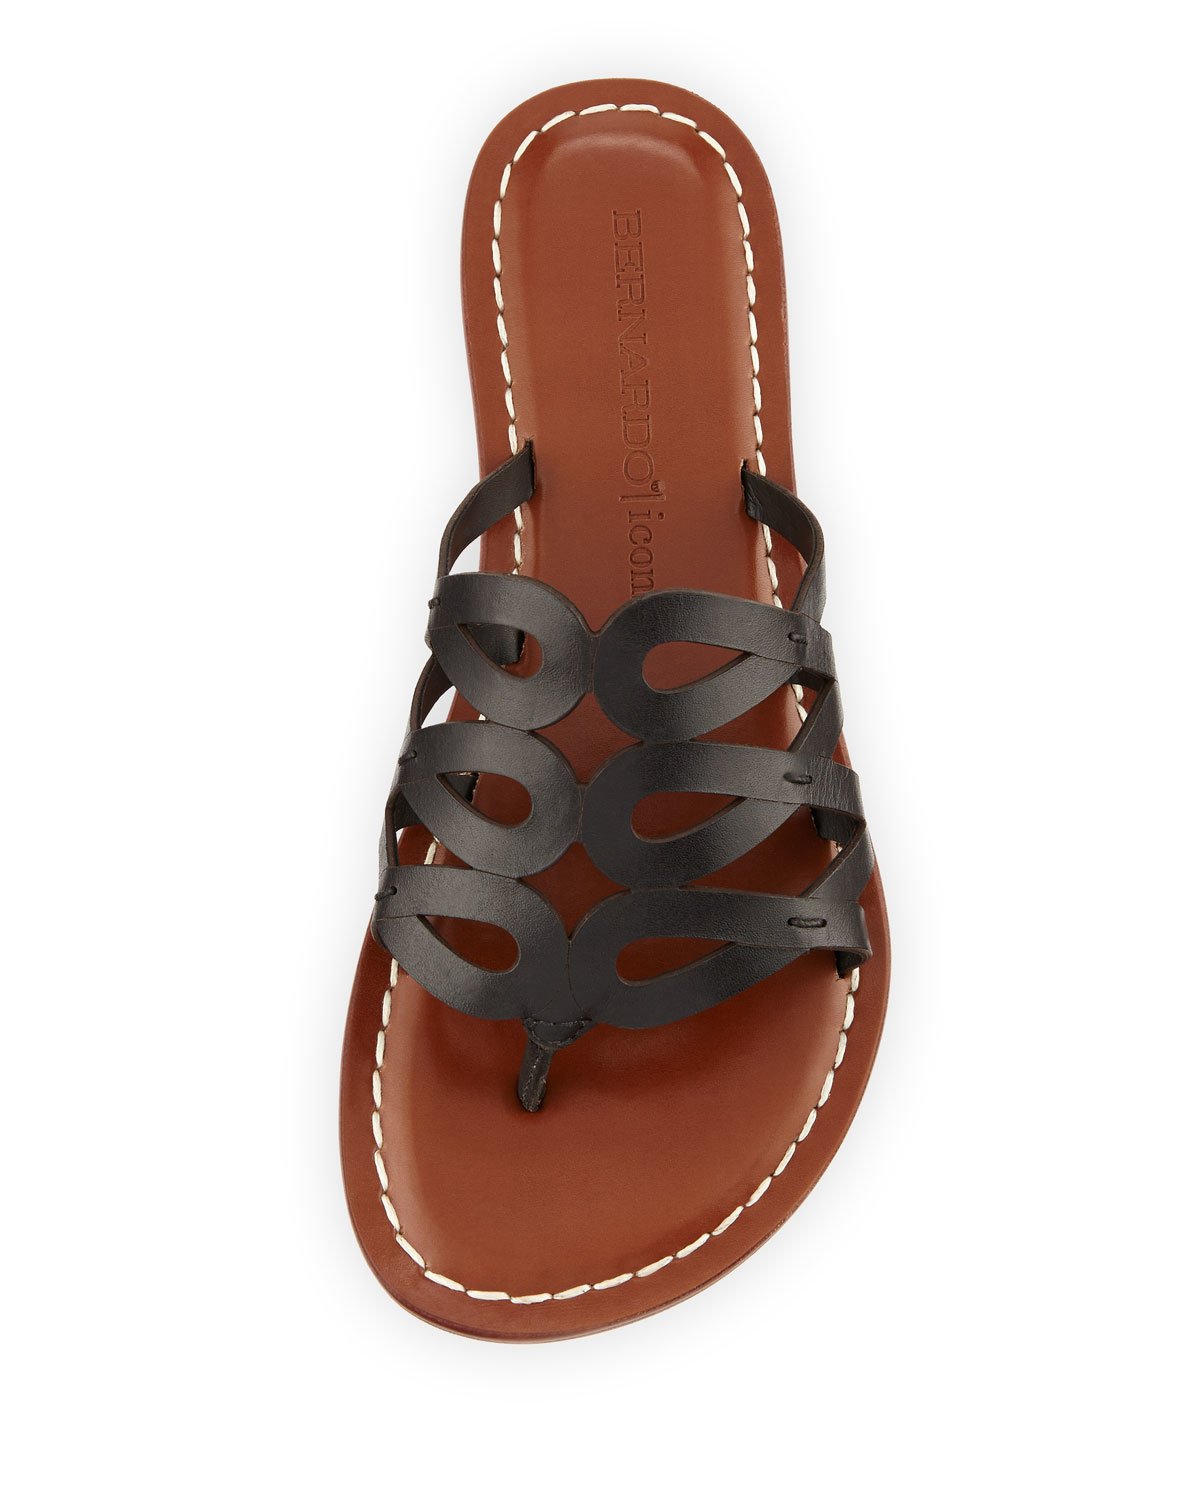 Bernardo Magnolia Leather Slide Sandal in Black - Lyst